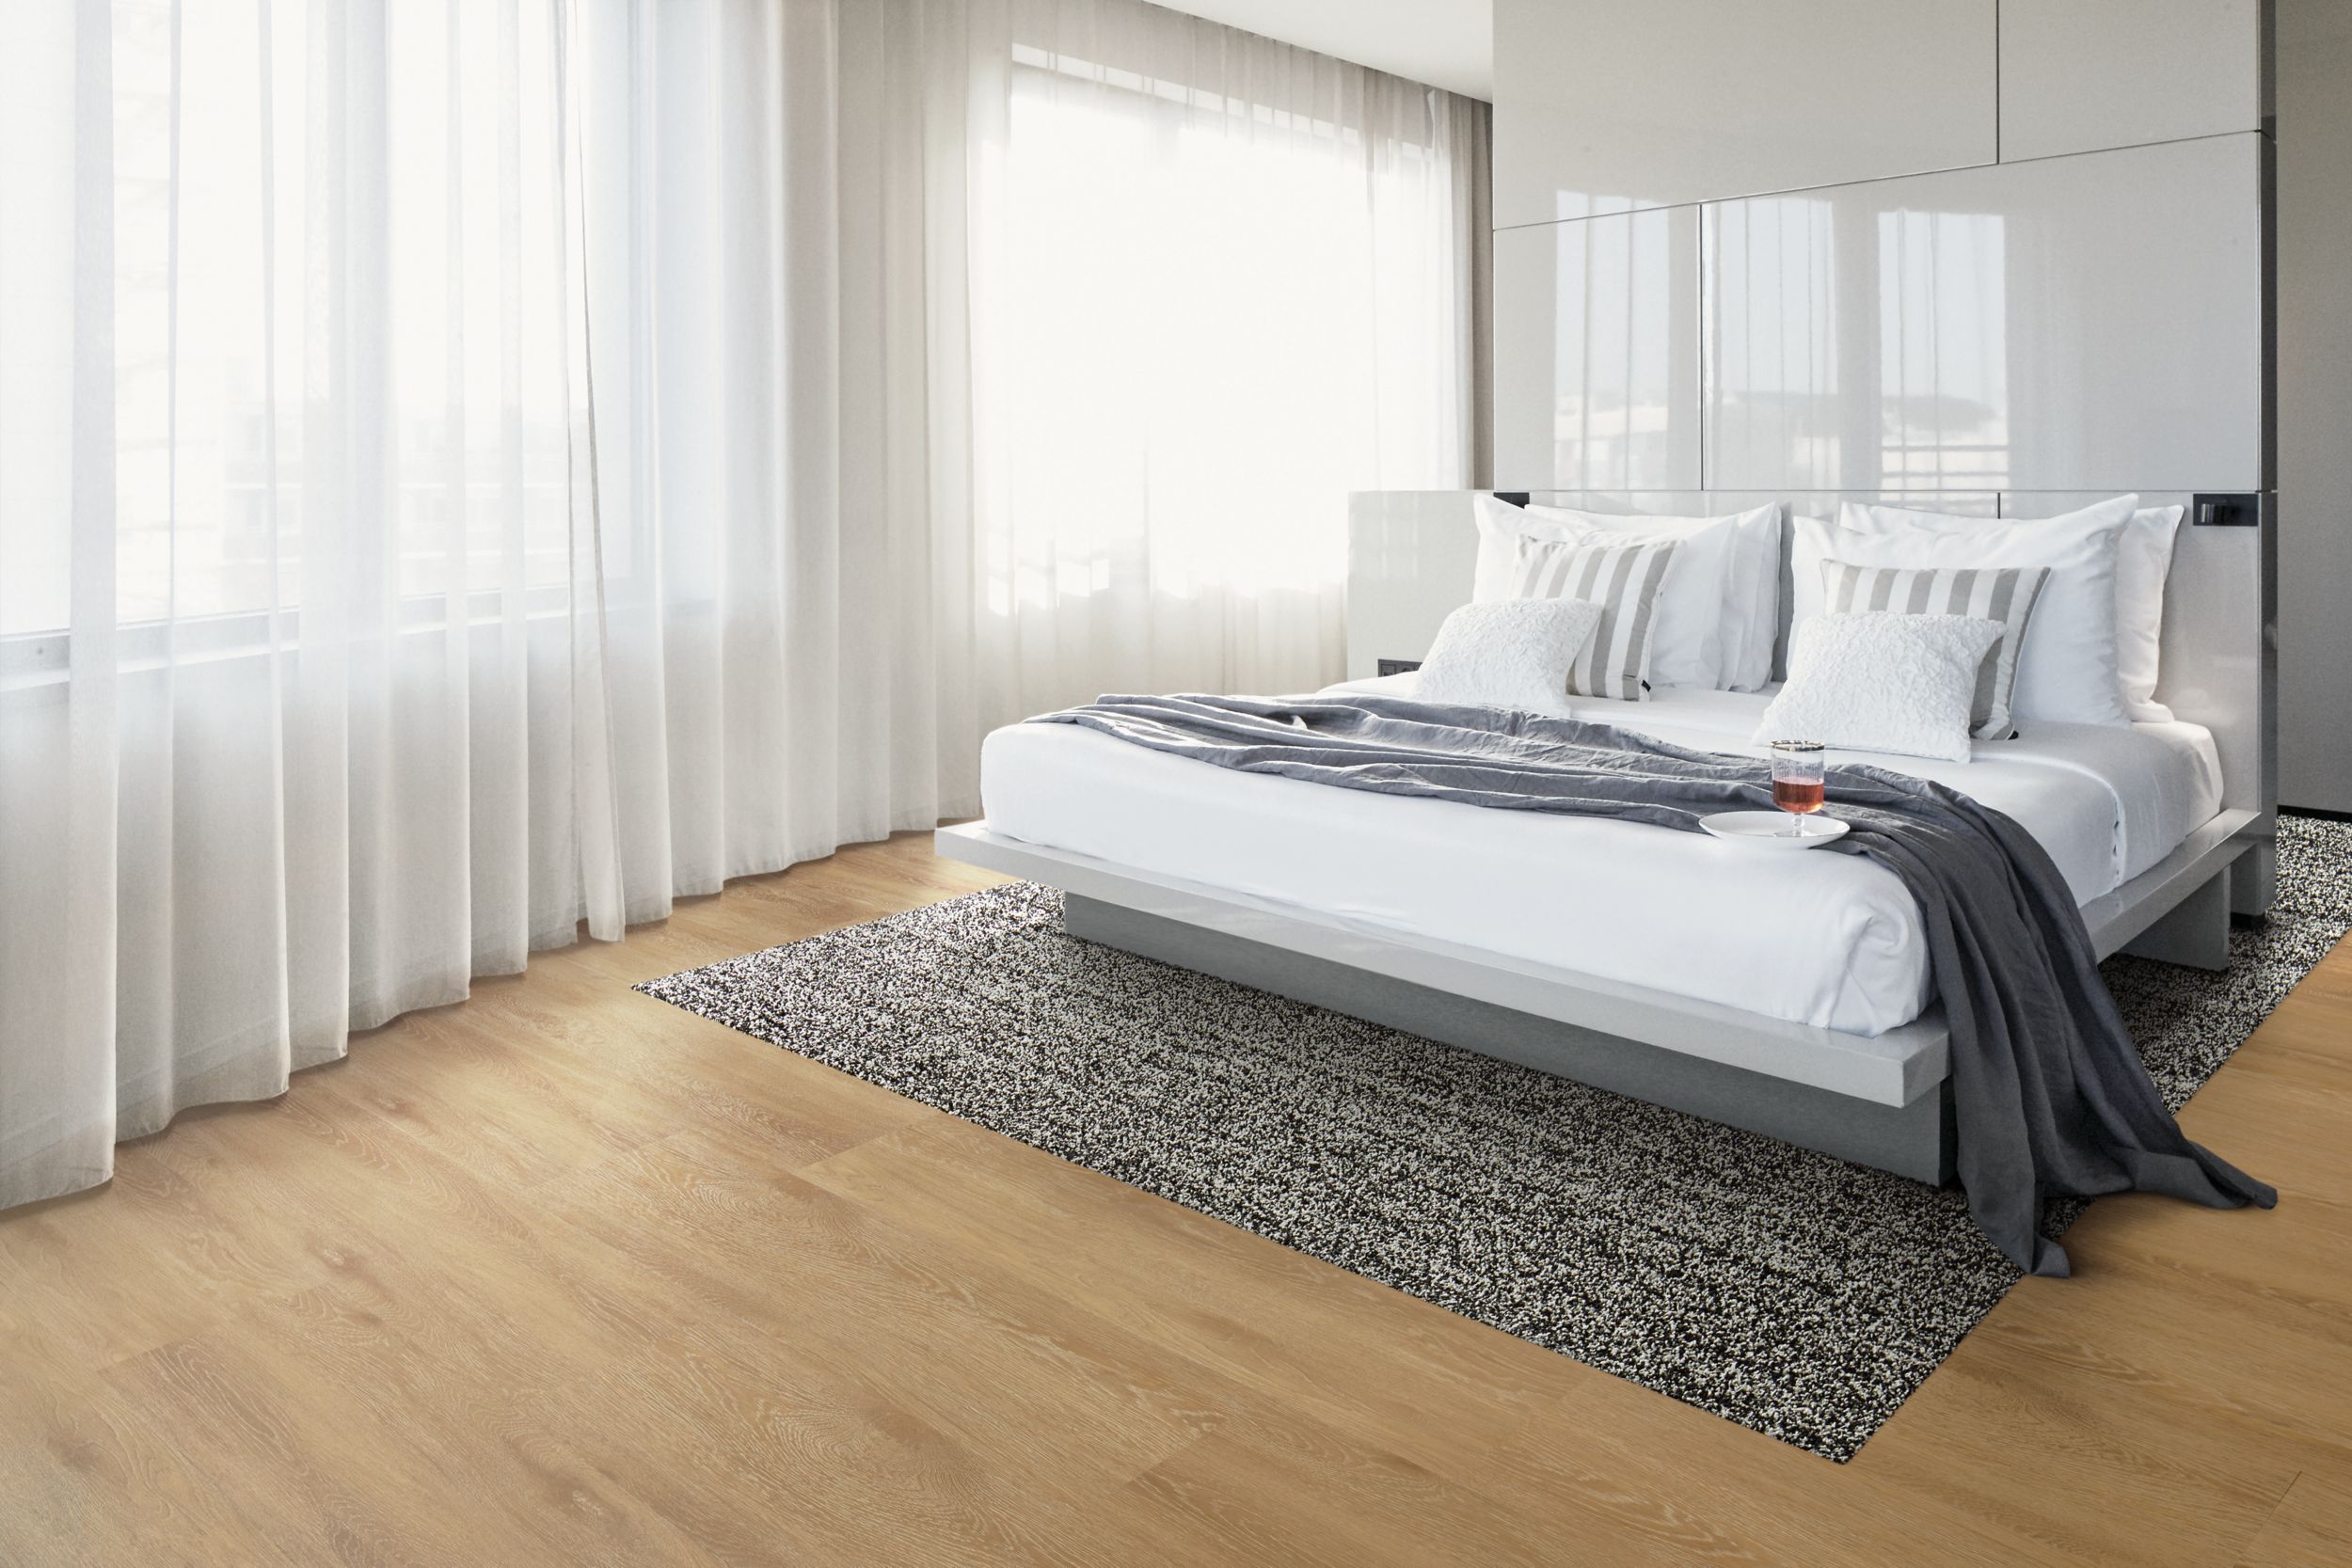 Interface Textured Woodgrains LVT and Overedge carpet tile in hotel suite imagen número 10